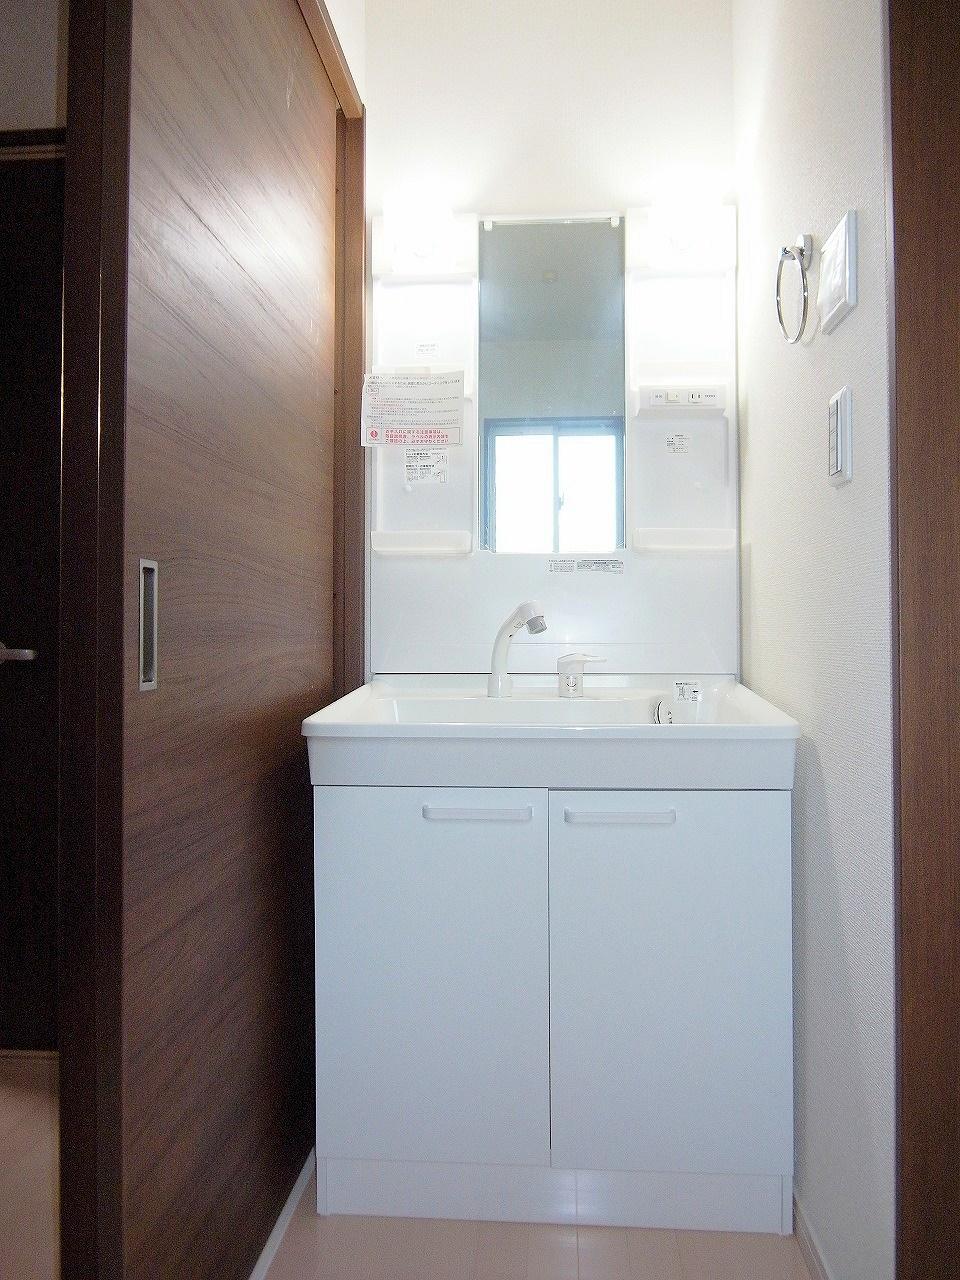 Wash basin, toilet. Bathroom vanity ・ Same specifications